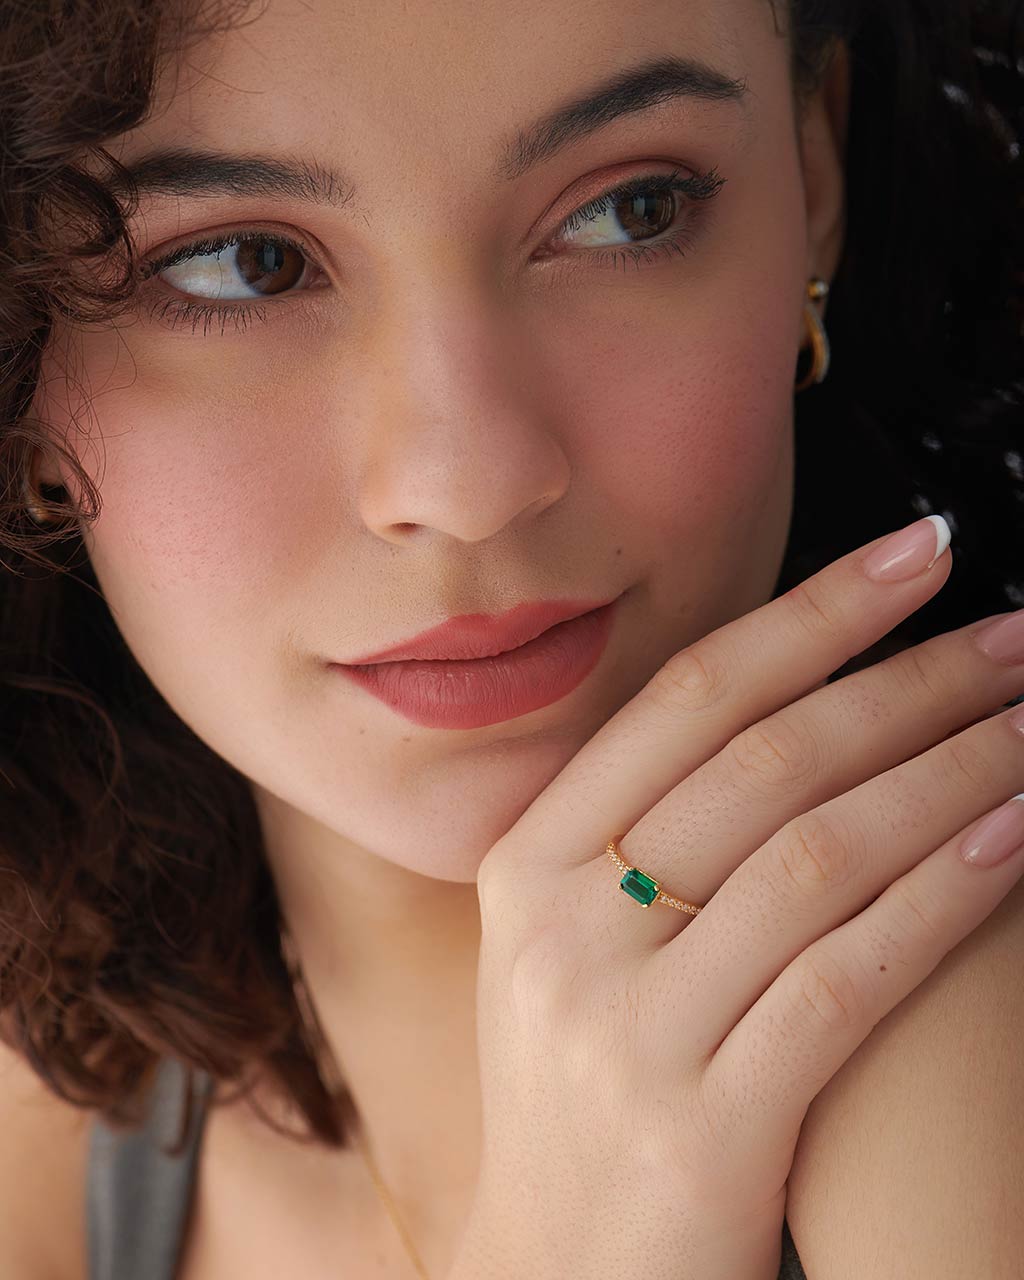 Created Emerald Diamond Ring